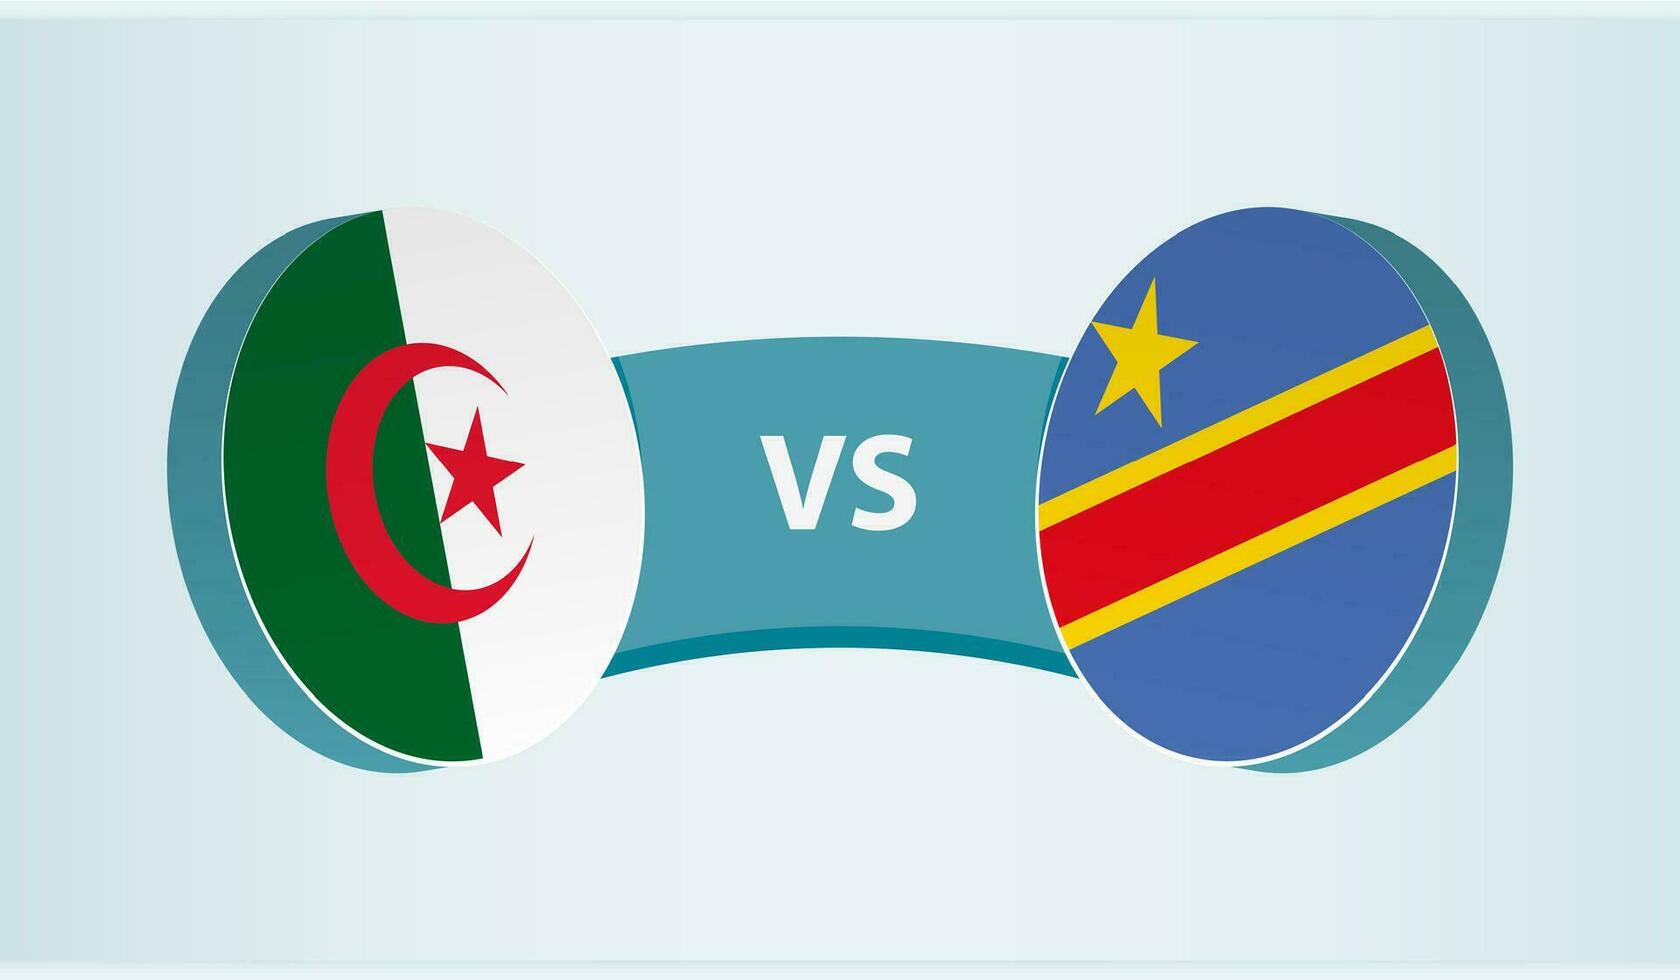 Algeria versus DR Congo, team sports competition concept. vector